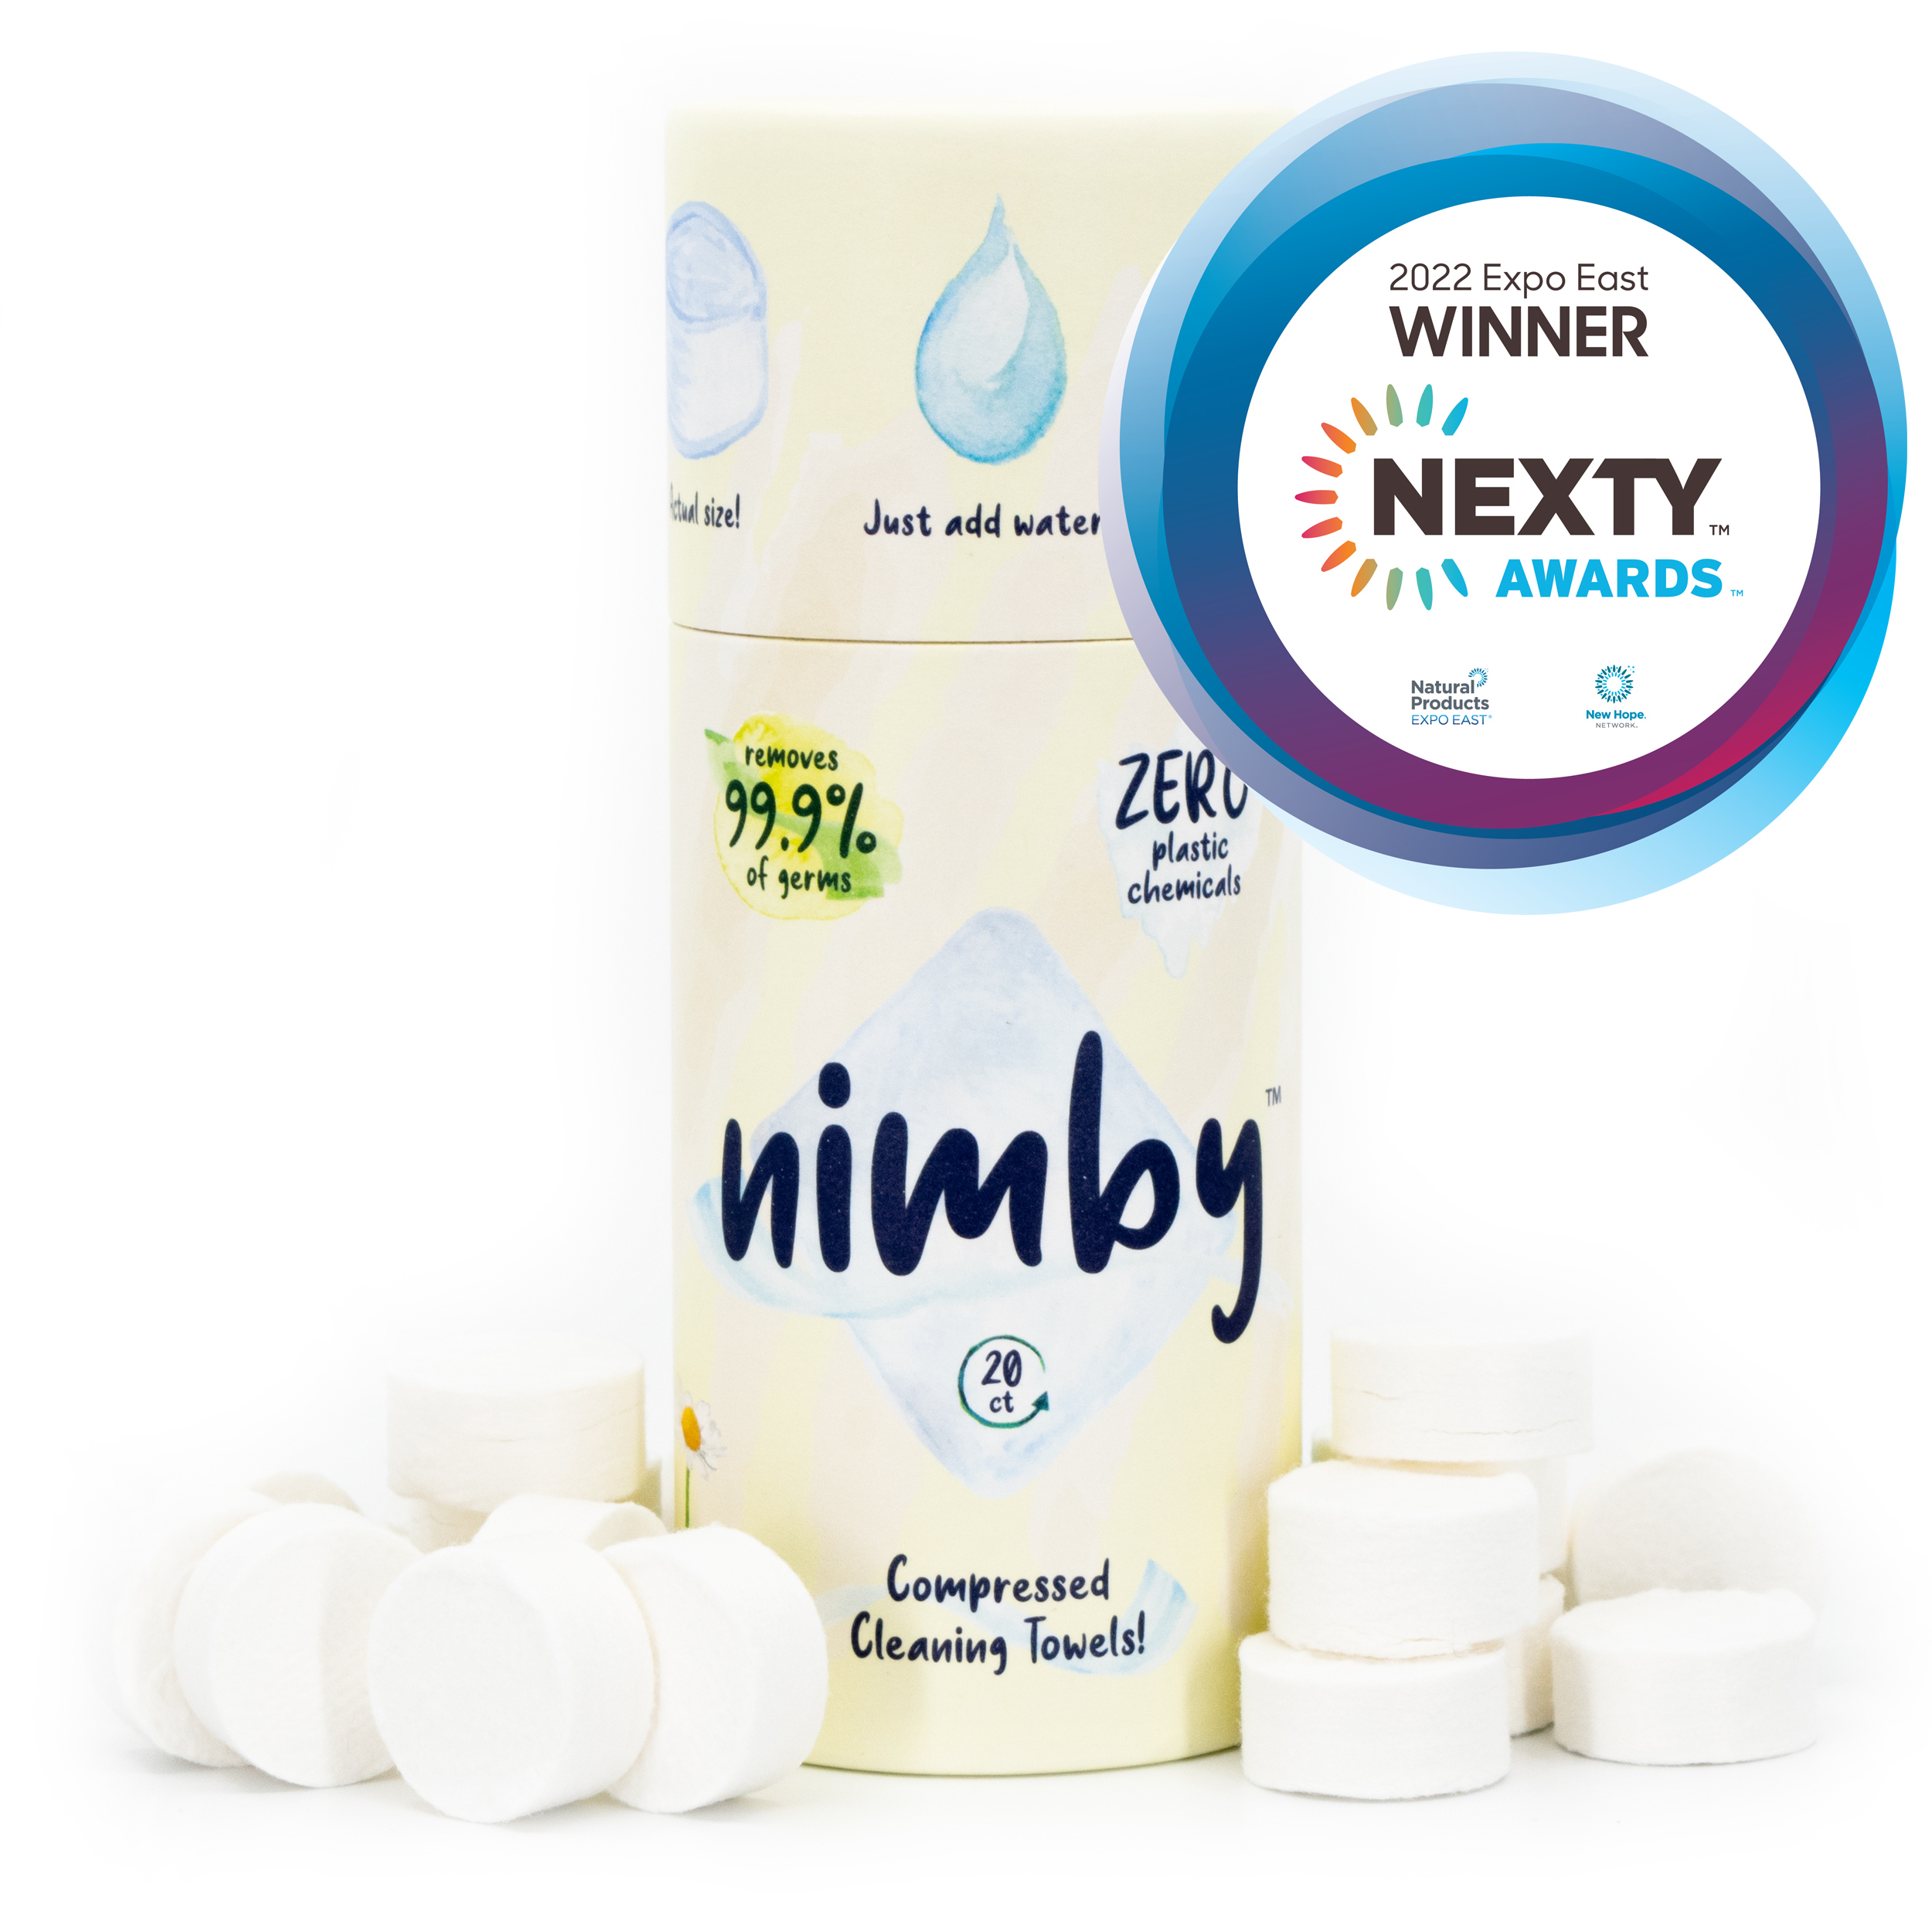 nimby nexty award winner new hope natural products